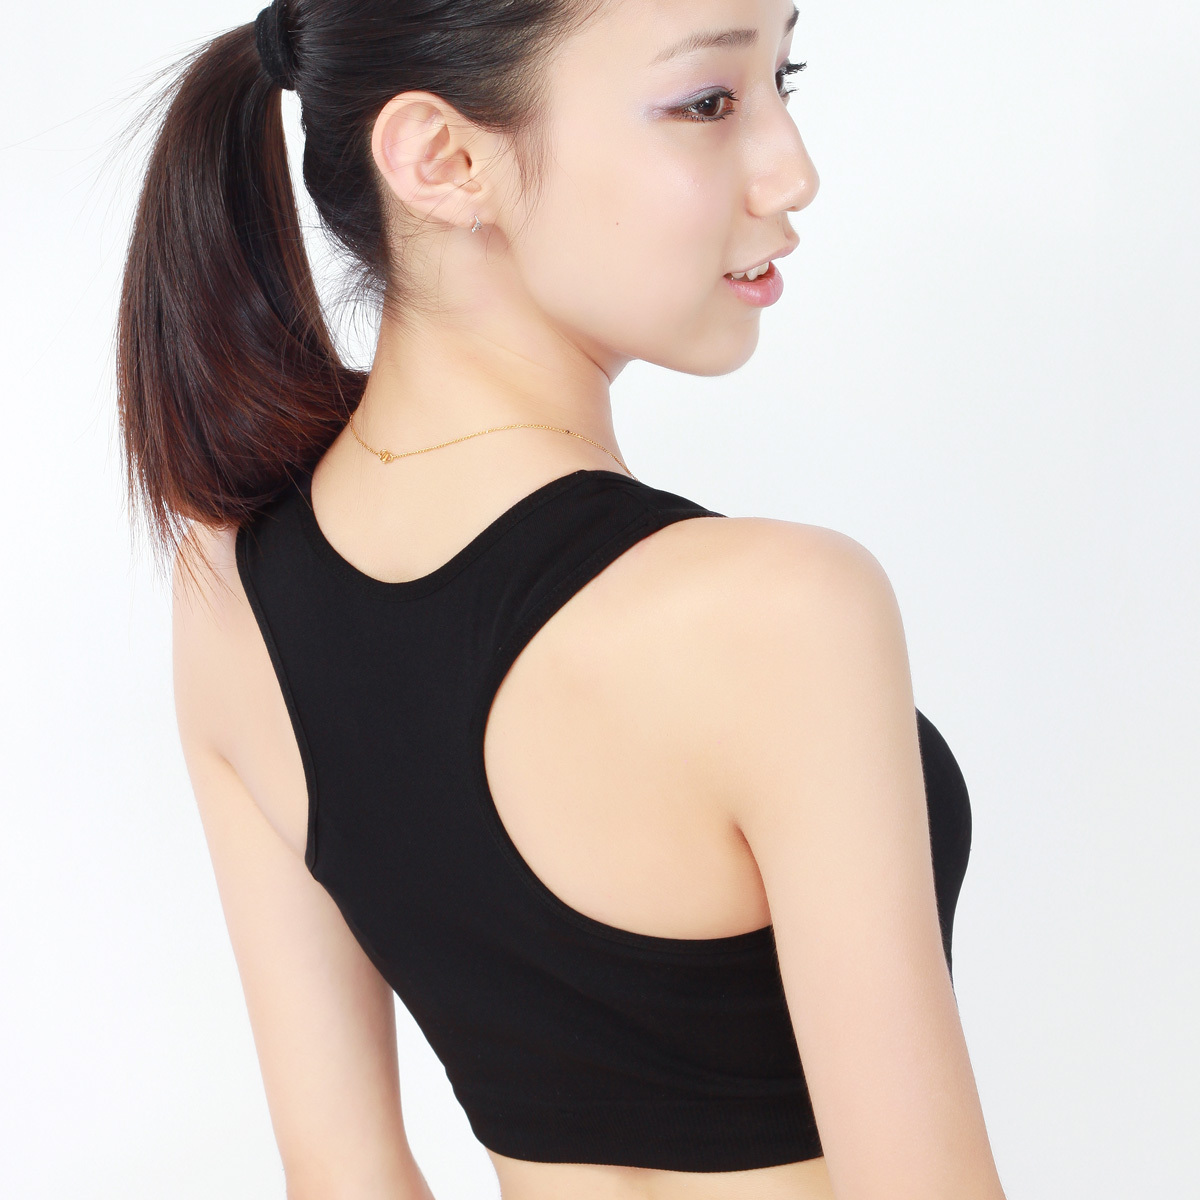 Anti-rattle vest design sports underwear women's tube top tube top fitness yoga running bra